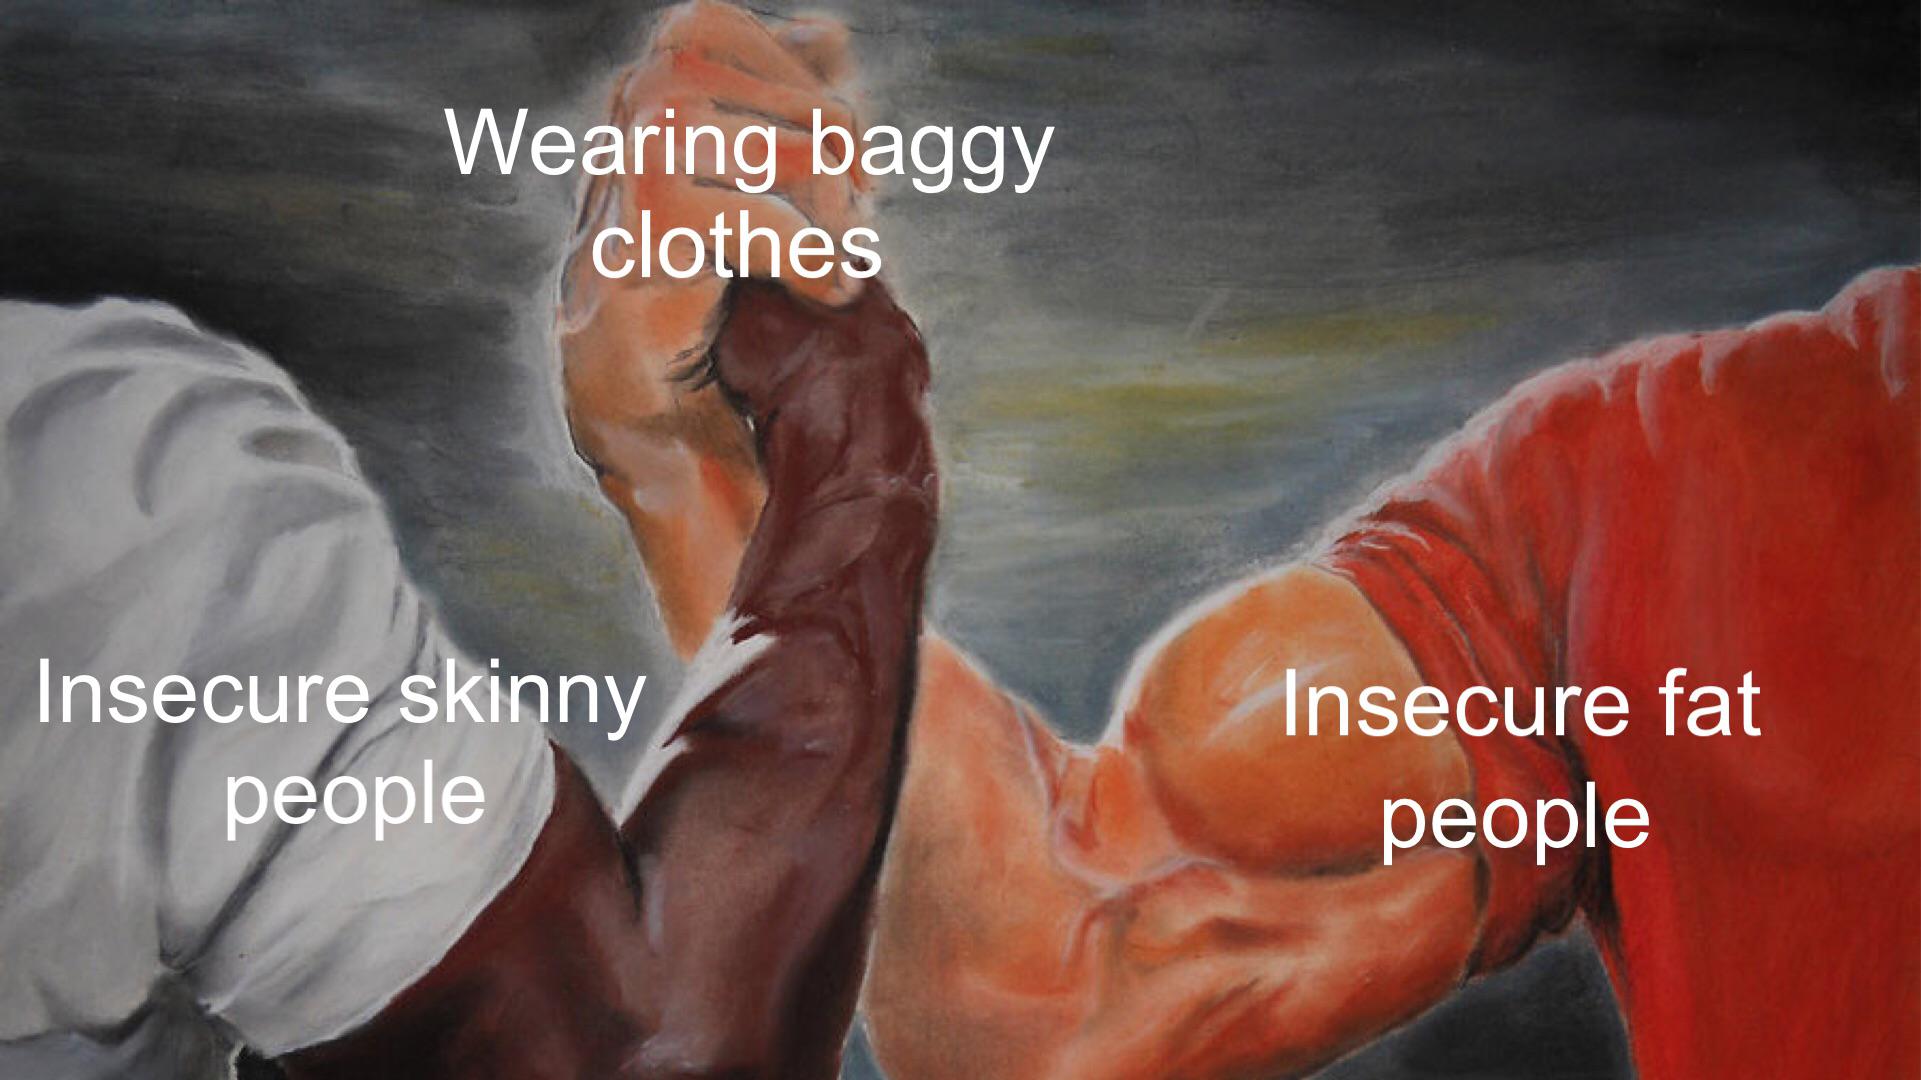 dank memes - solidarity handshake meme - Wearing baggy clothes Insecure skinny people Insecure fat people